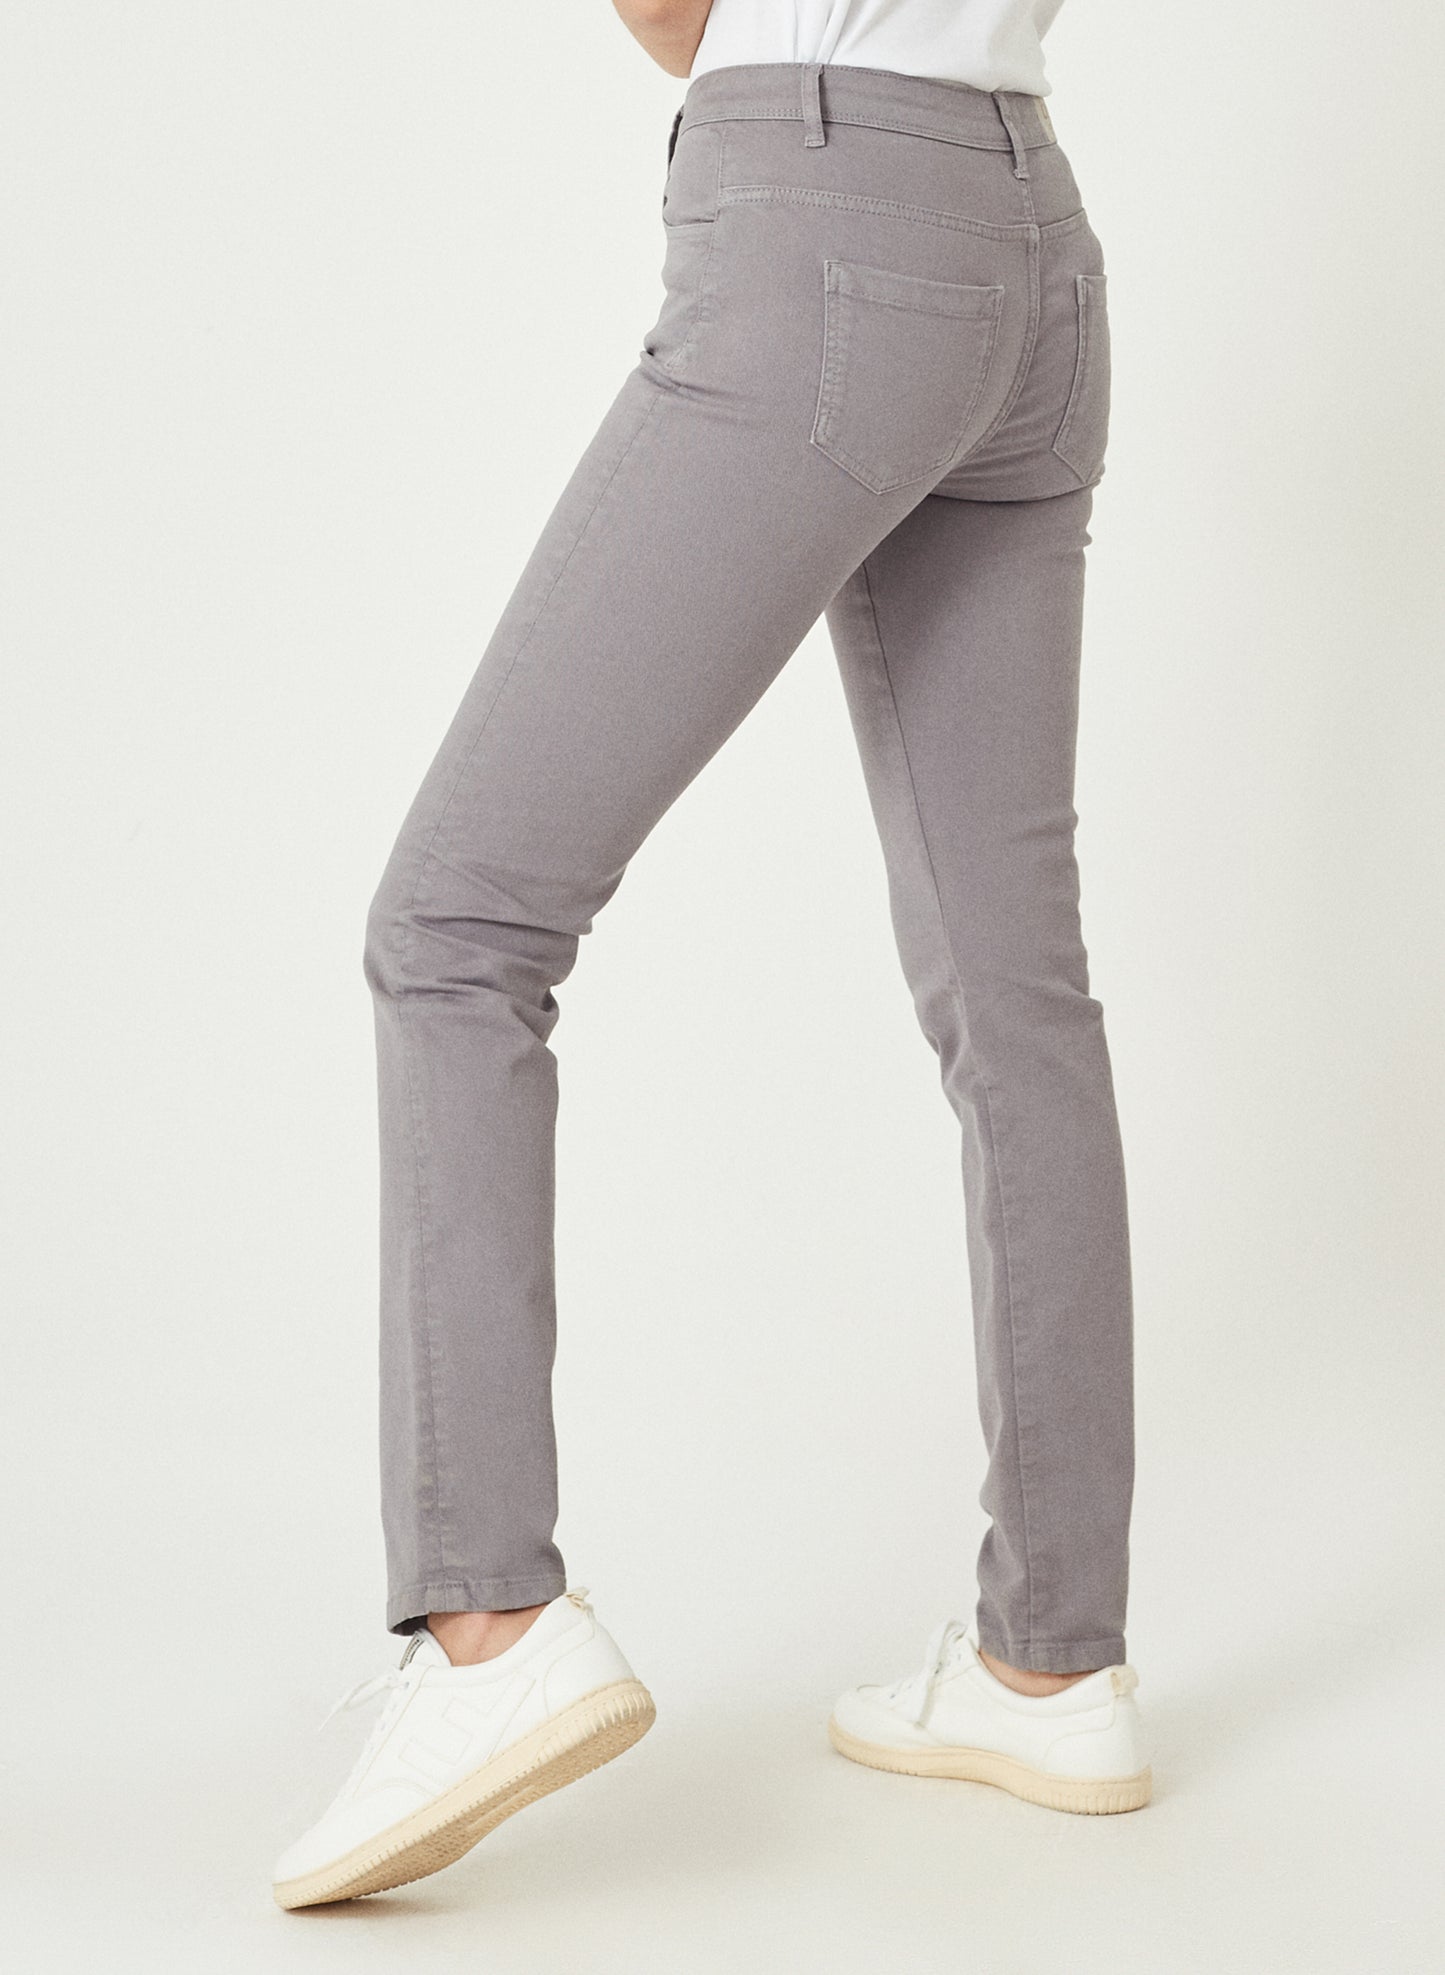 MINA - Slim Fit Denim Jeans Pant - Grey